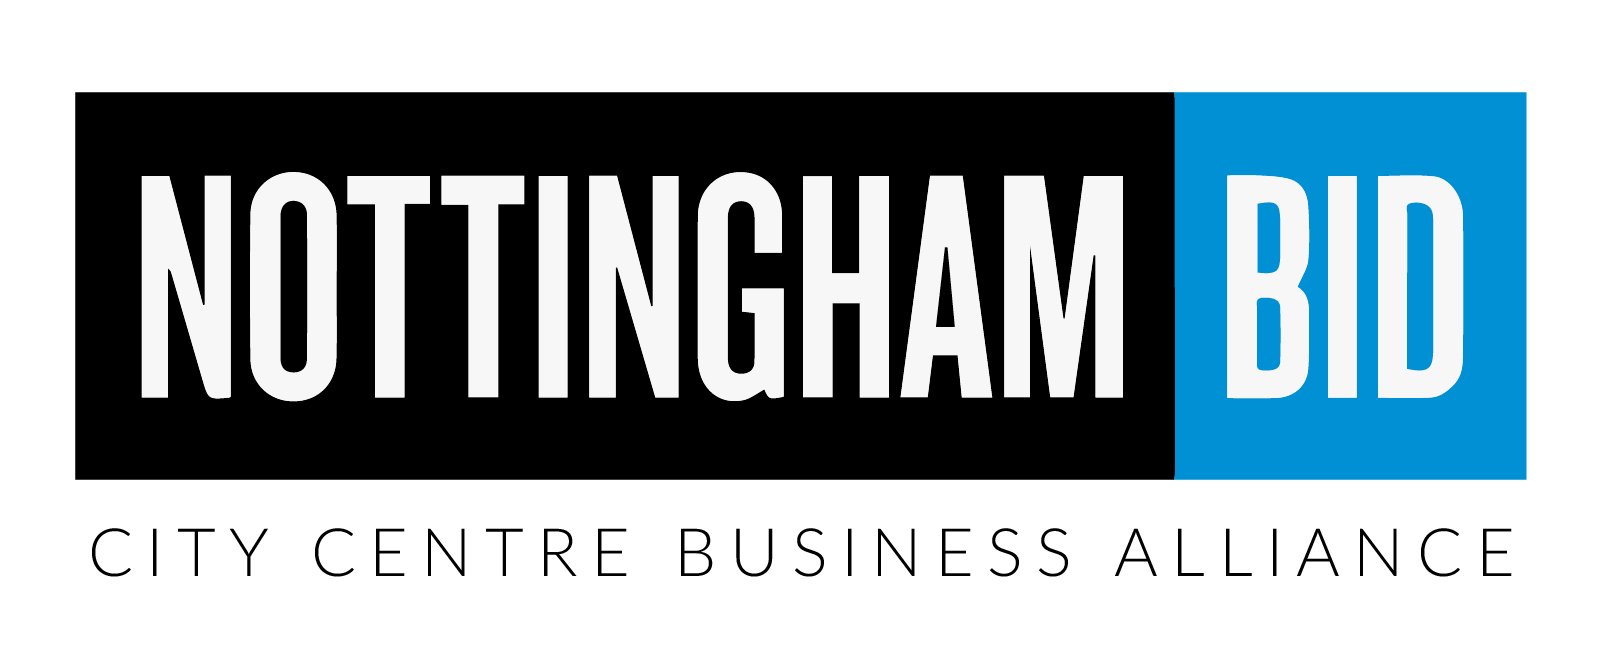 Nottingham BID logo